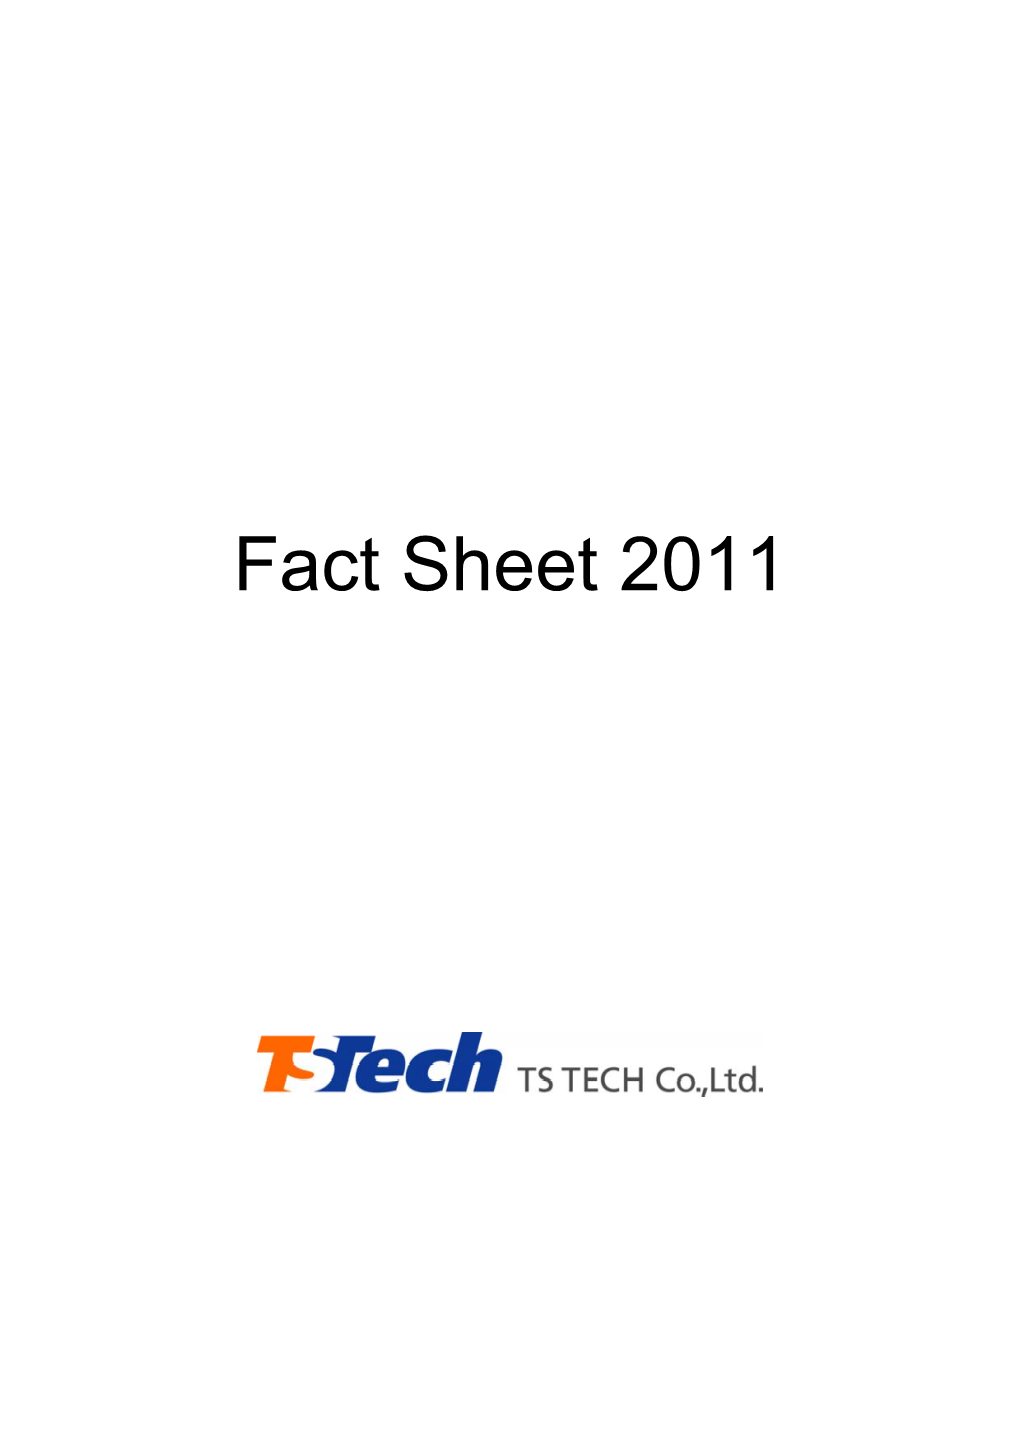 Fact Sheet 2011 Fact Sheet 2011